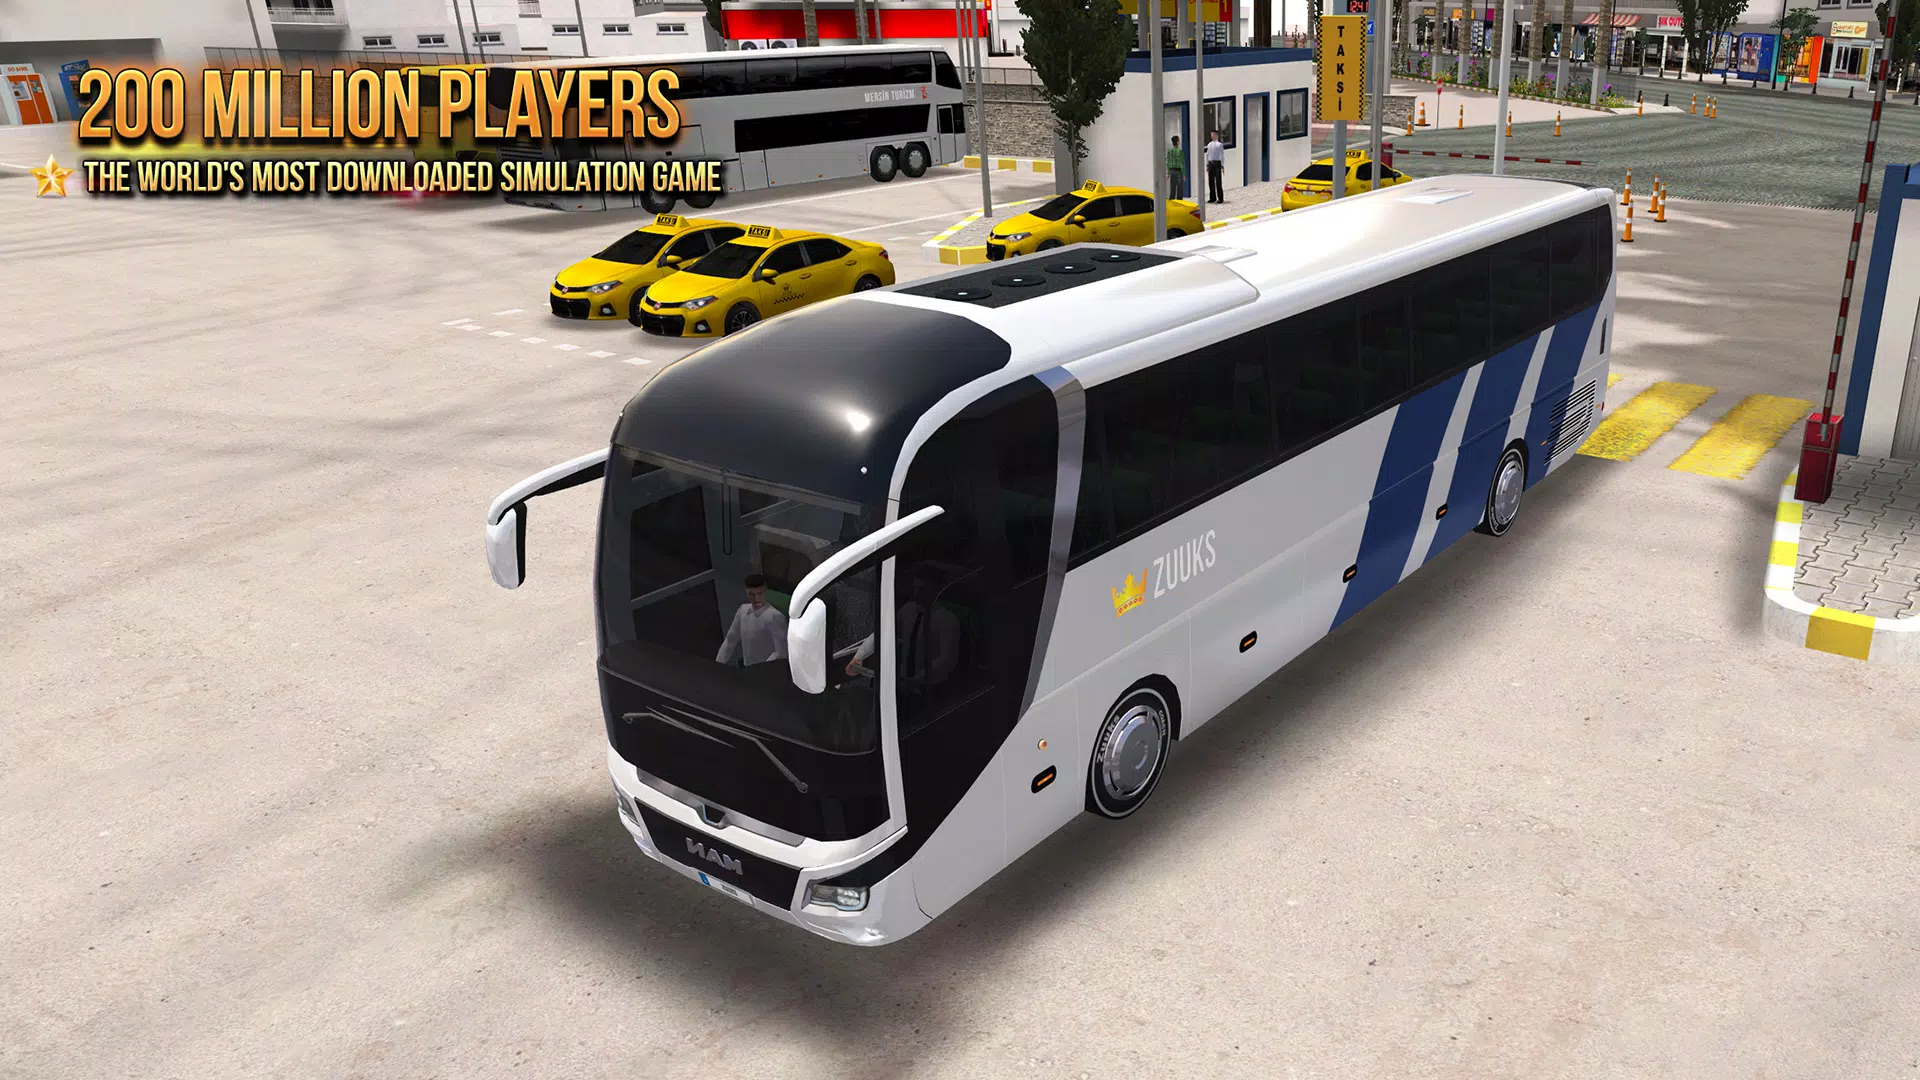 Bus Simulator Ultimate Apk